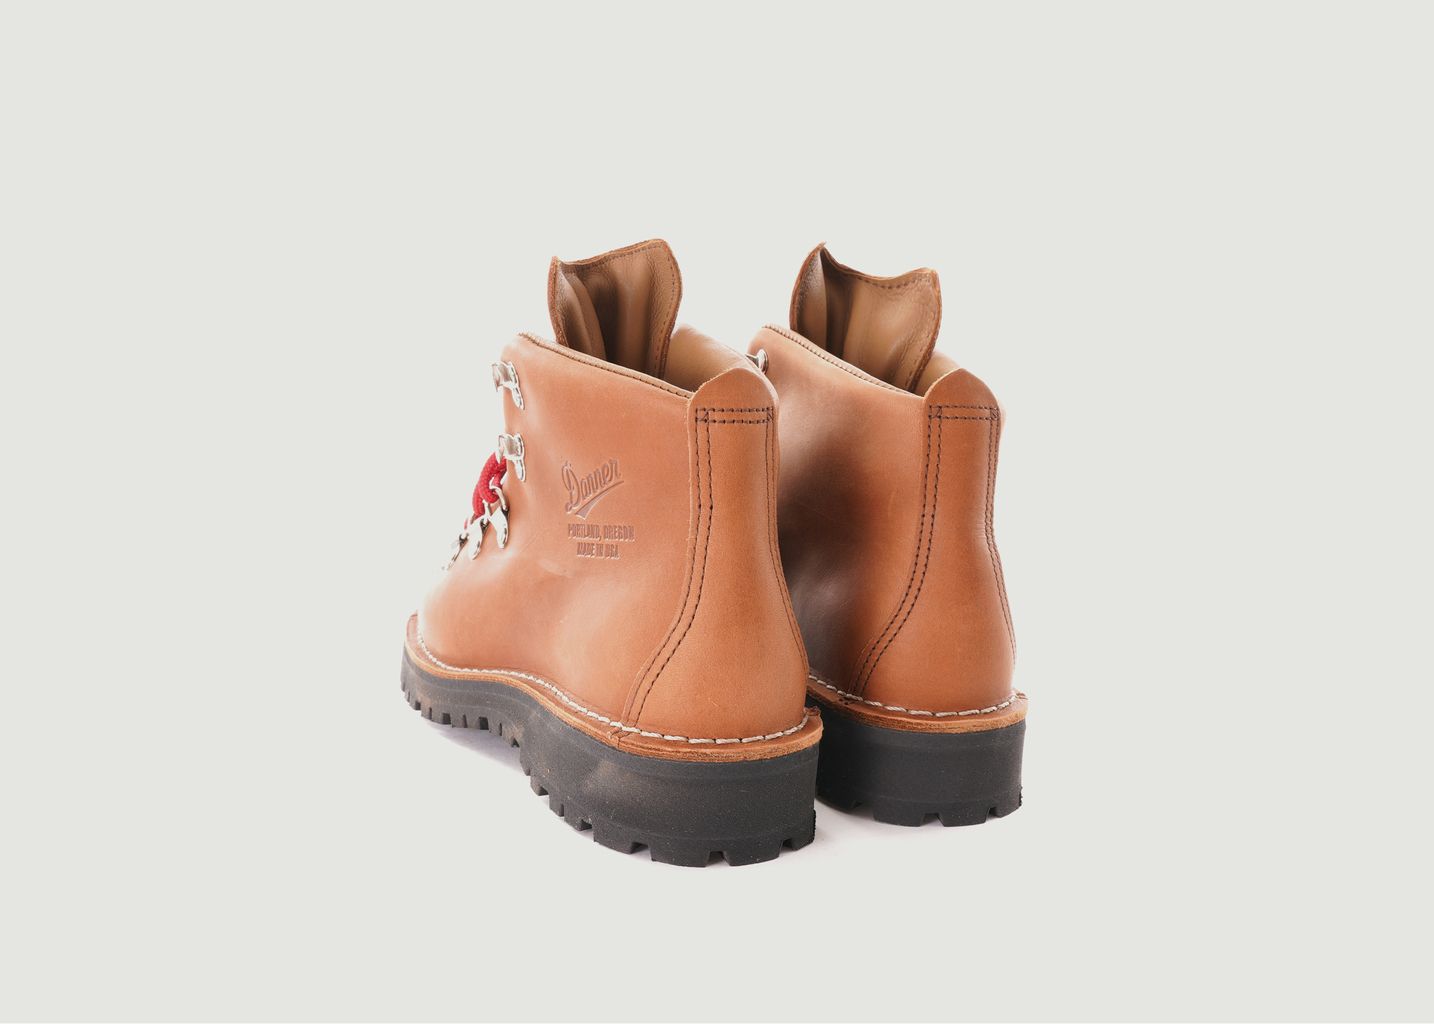 Mountain Light Leather Boots Clovis - Danner